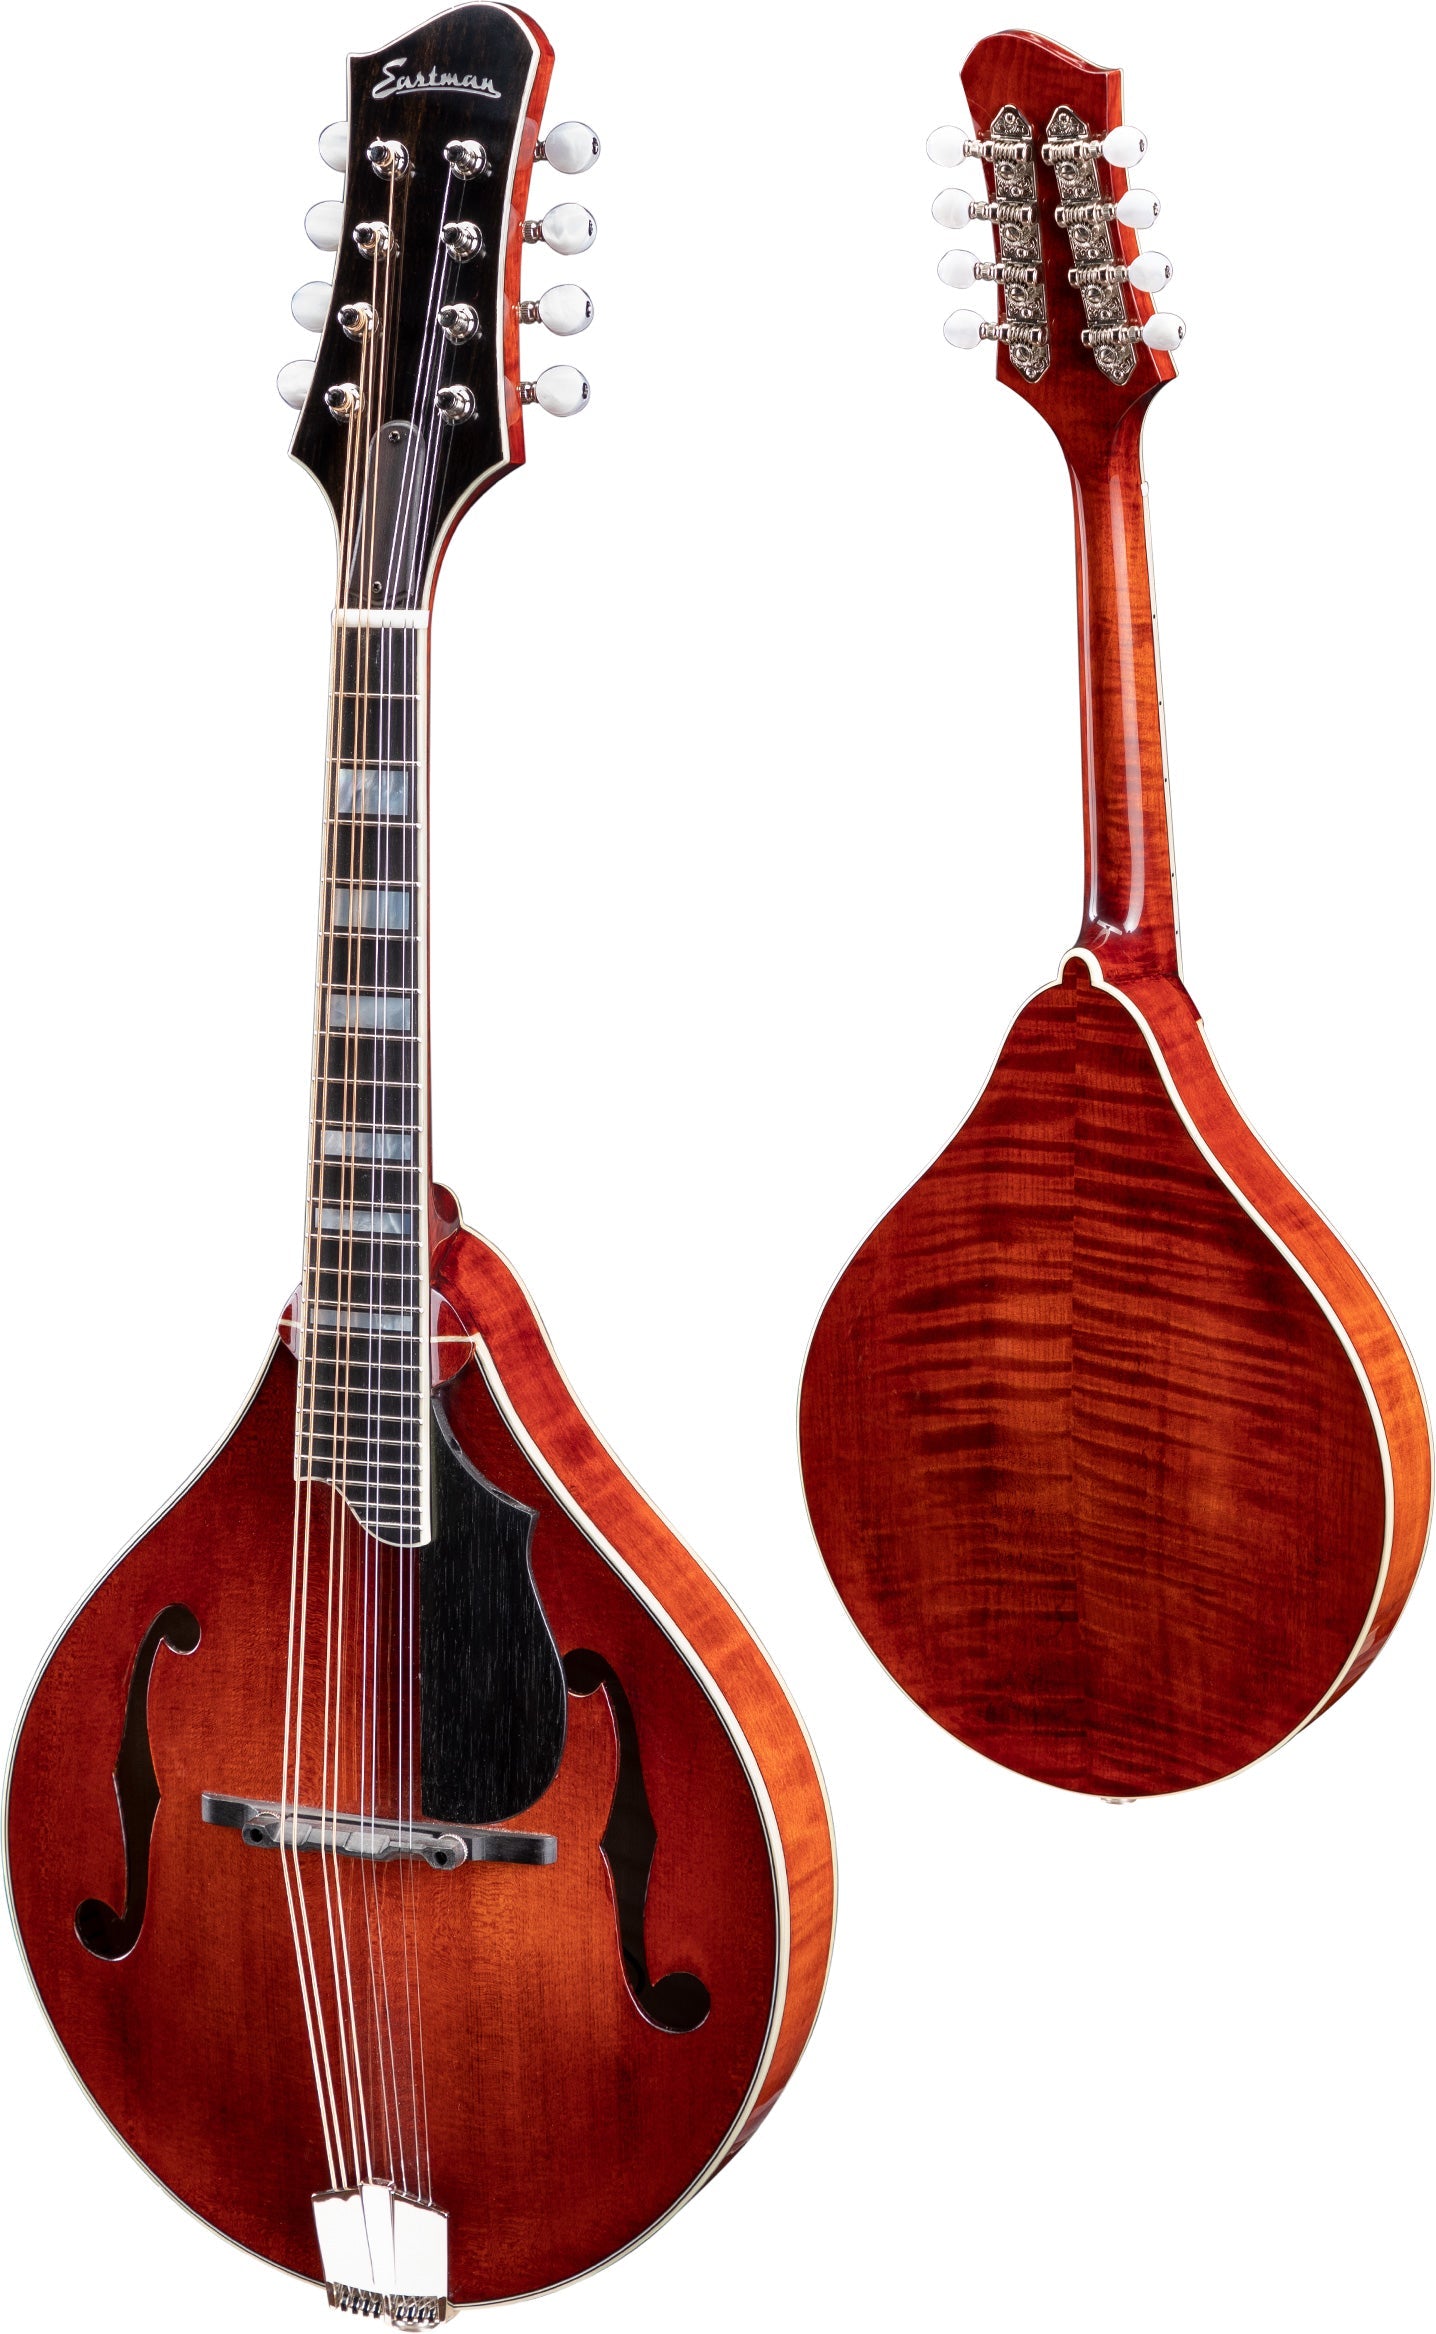 Eastman MD605 A-style F-holes Mandolin, Mandolin for sale at Richards Guitars.